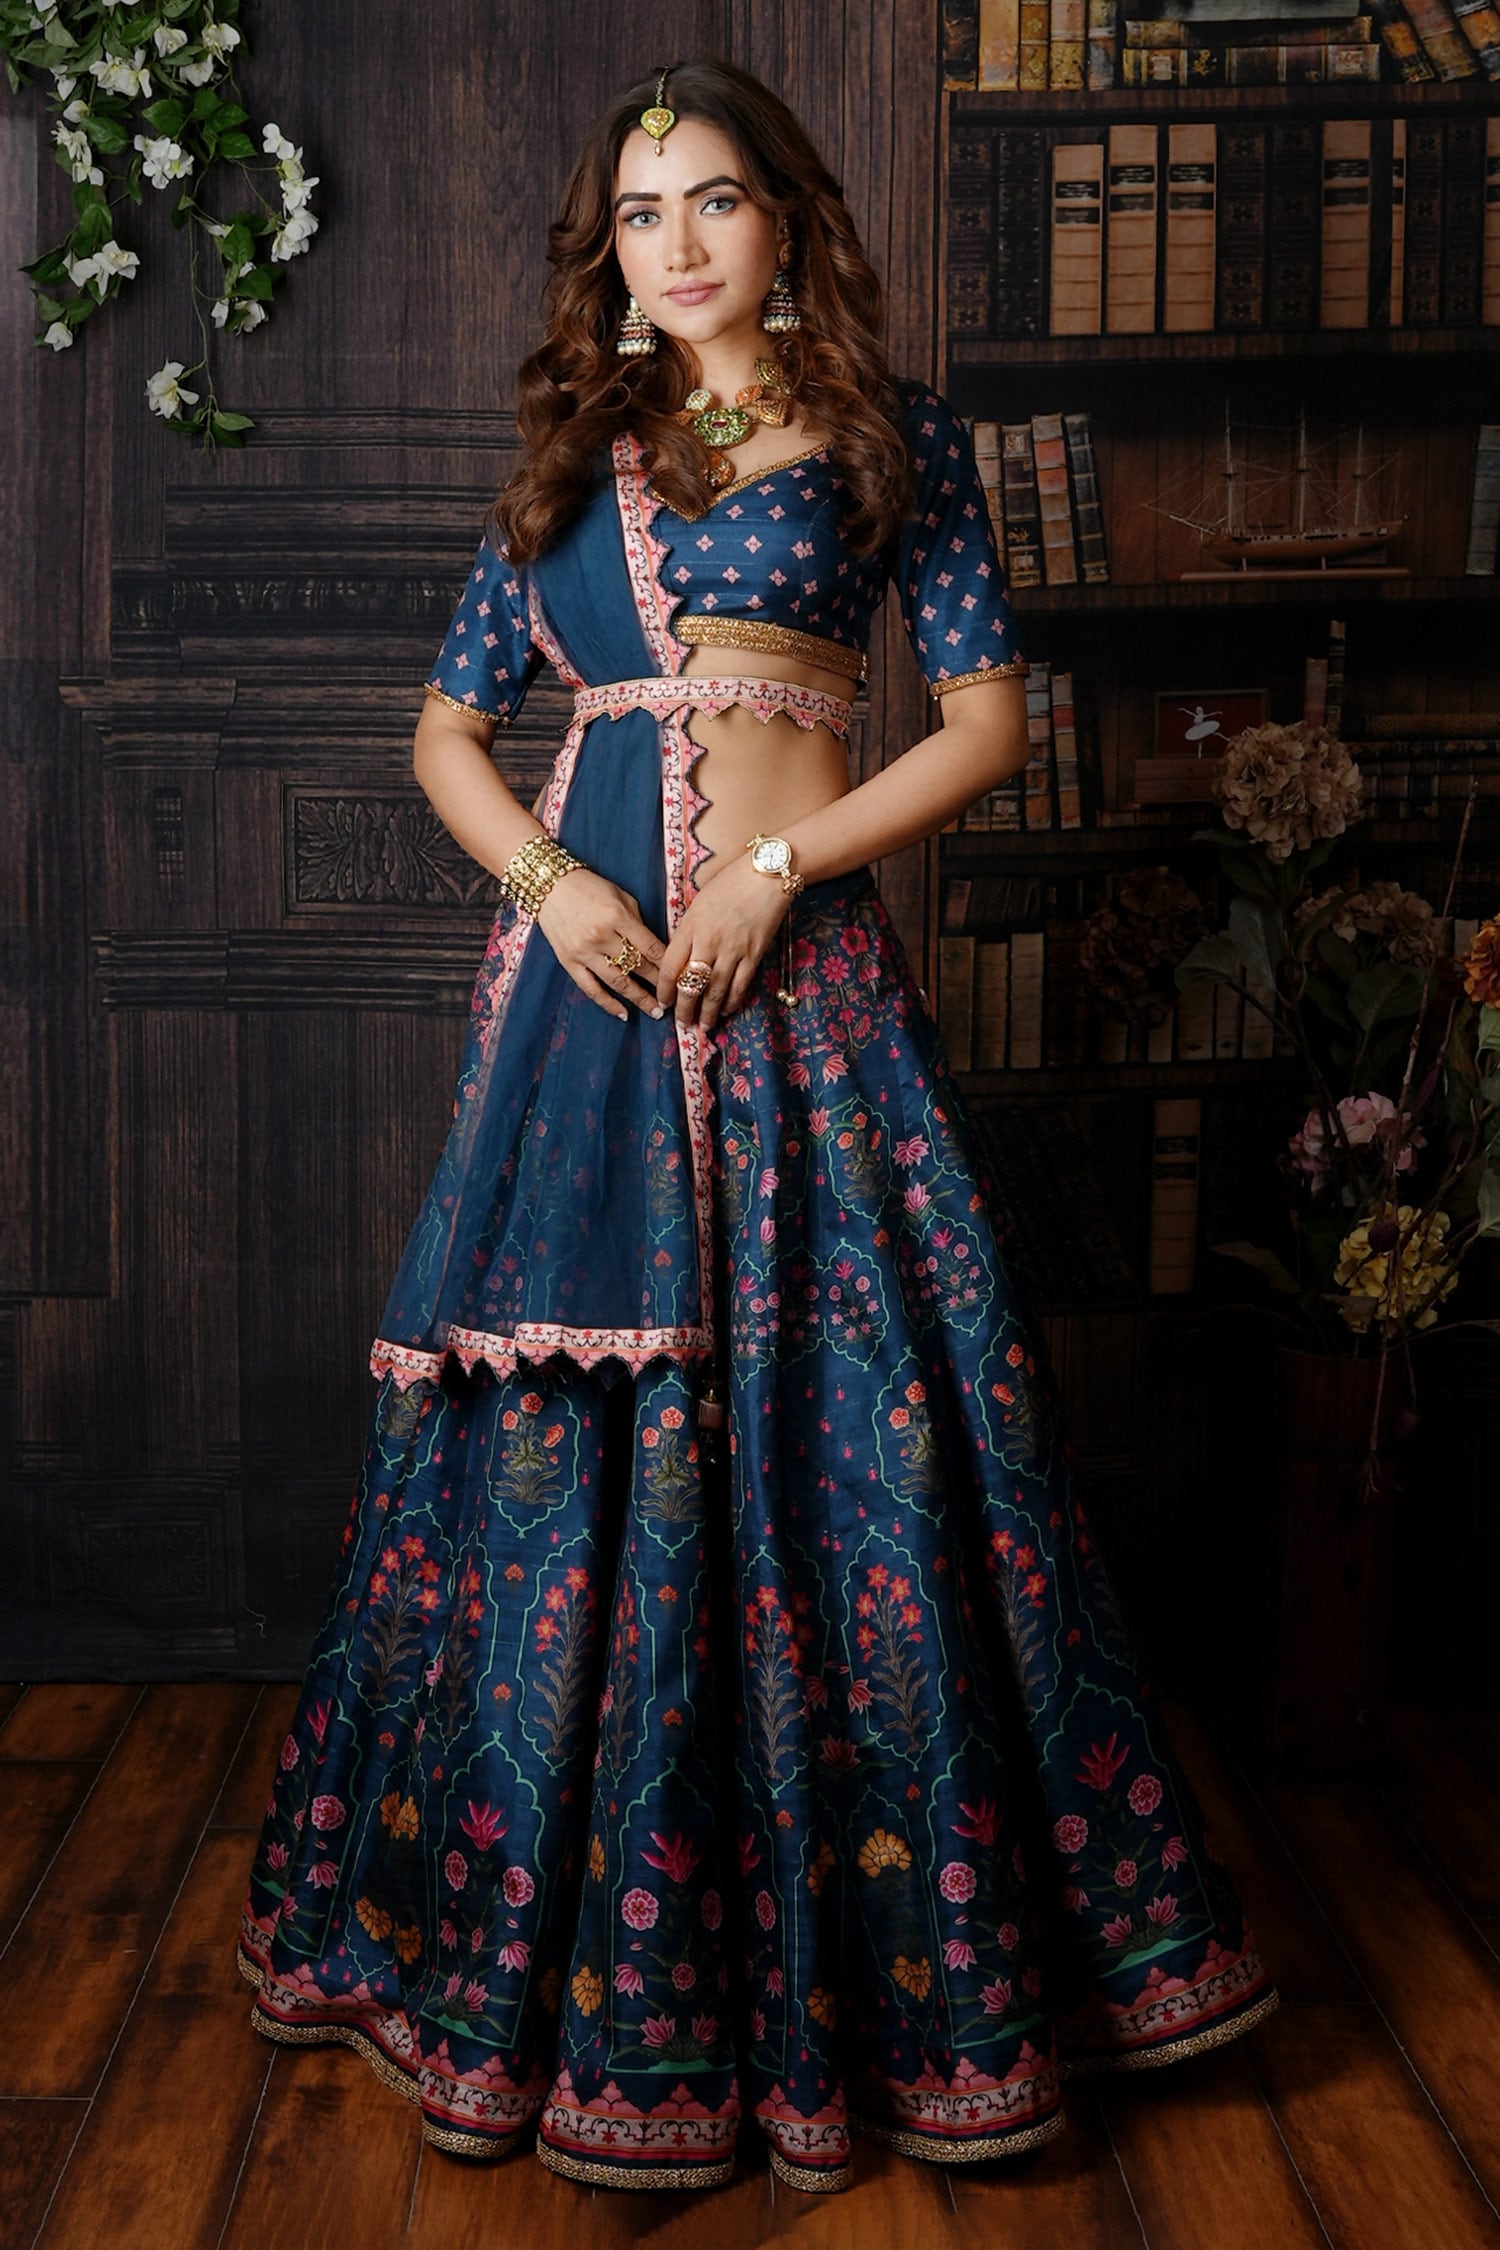 Rajasthani Dress Online - Ranisa by ranisastore on DeviantArt